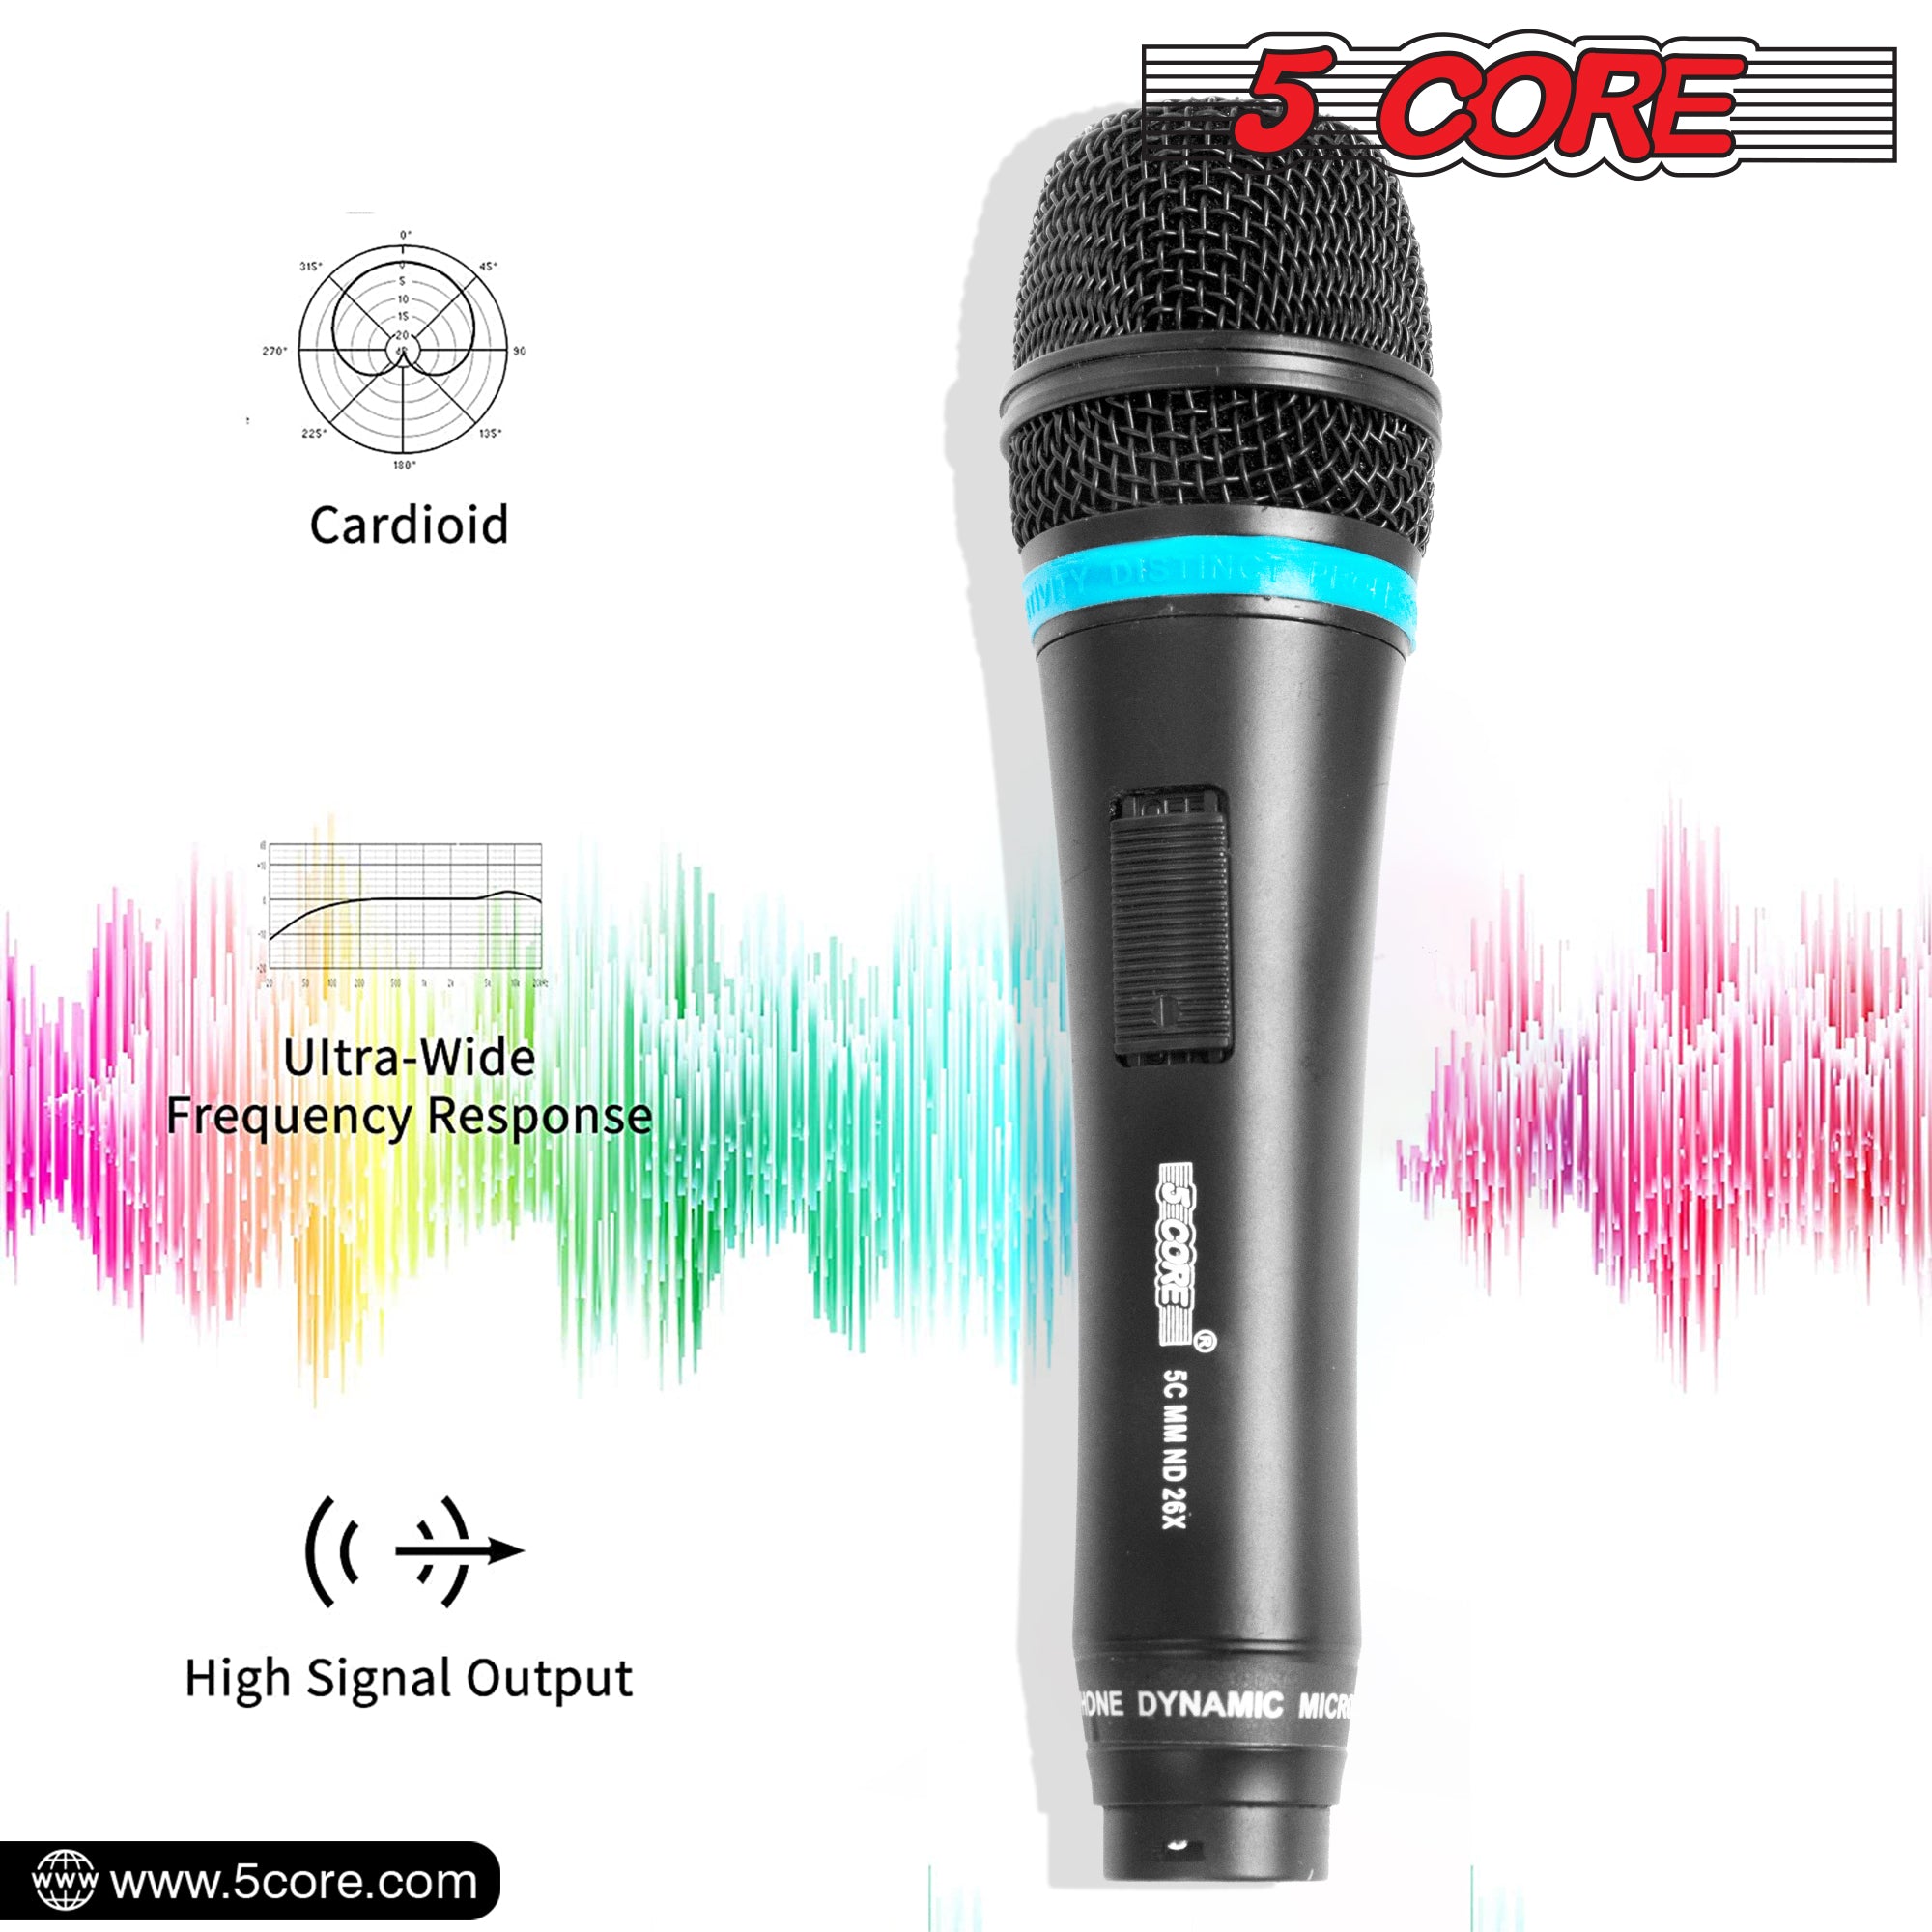 5 Core Microphone Professional Dynamic Karaoke XLR Wired Mic w ON/OFF Switch Pop Filter Cardioid Unidirectional Pickup Handheld Micrófono -ND-26X